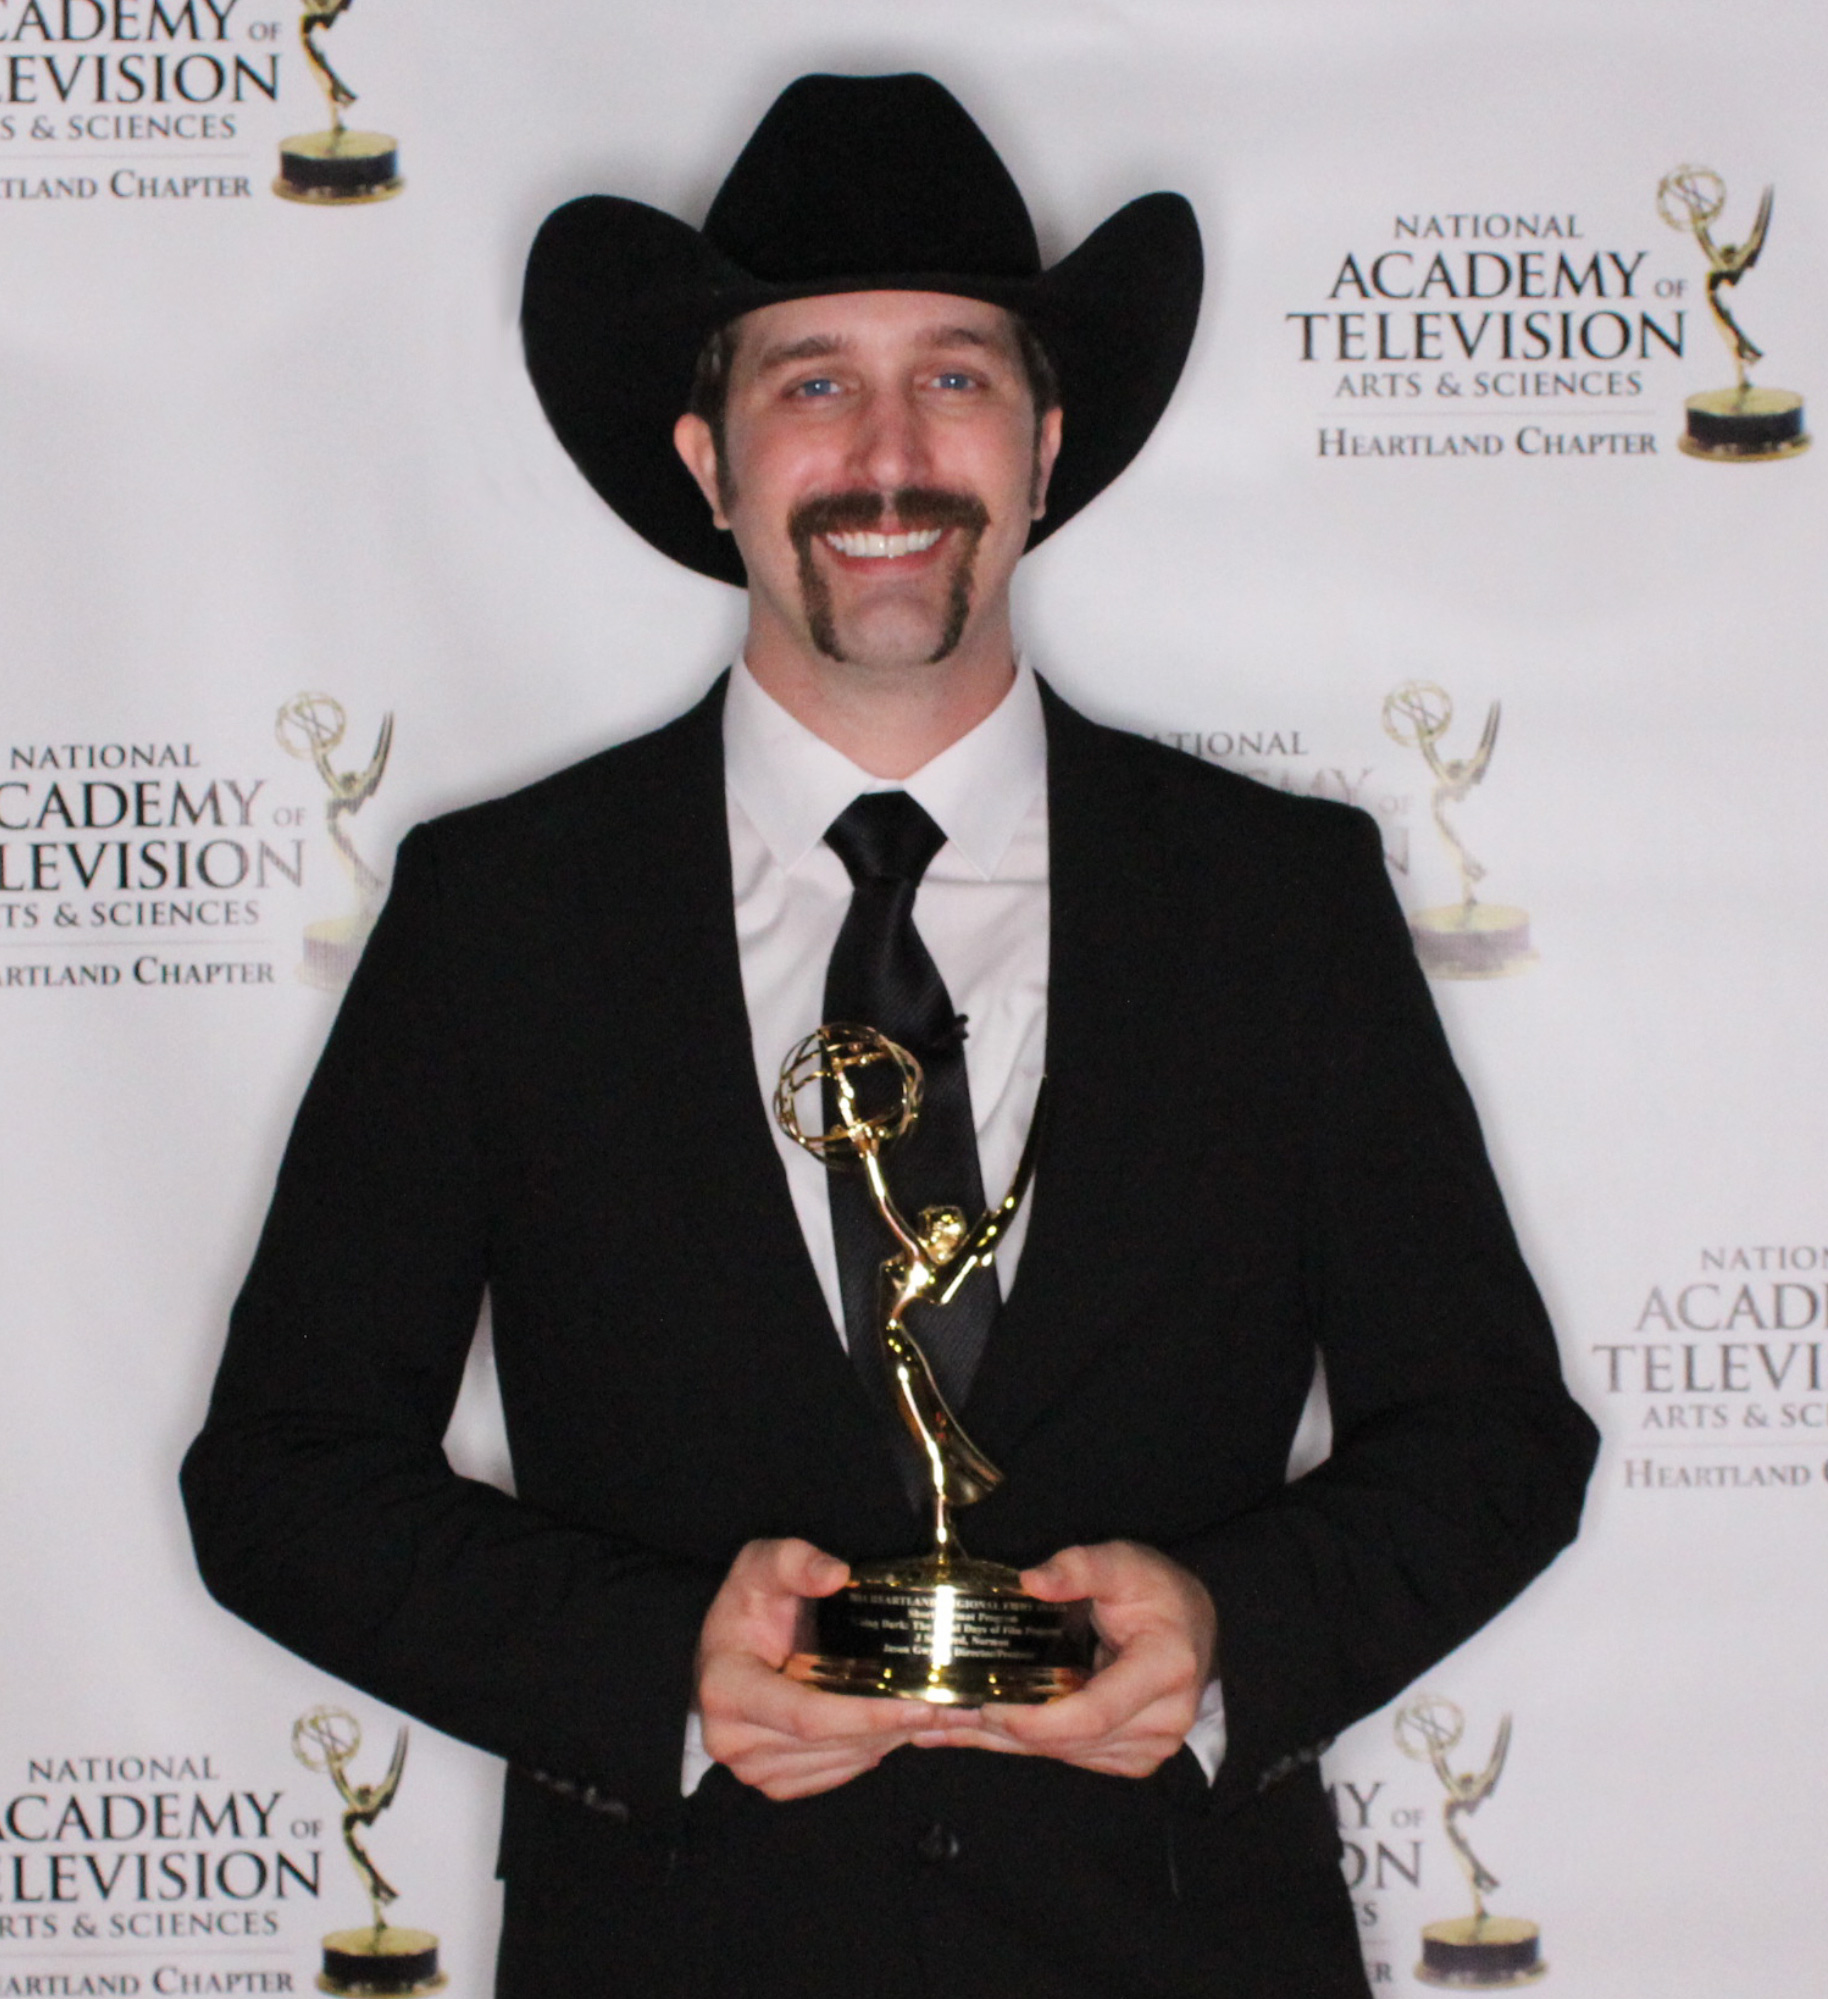 Jason Gwynn - Winning an Emmy for Going Dark: The Final Days of Film Projection